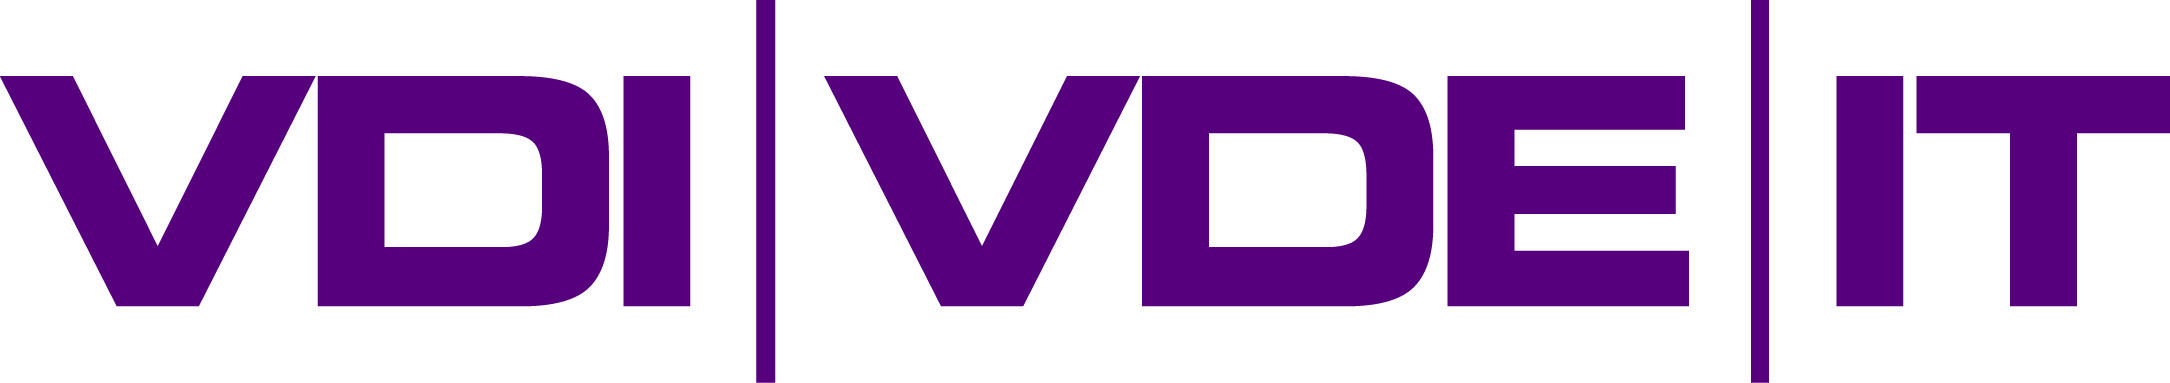 Logo VDI VDE